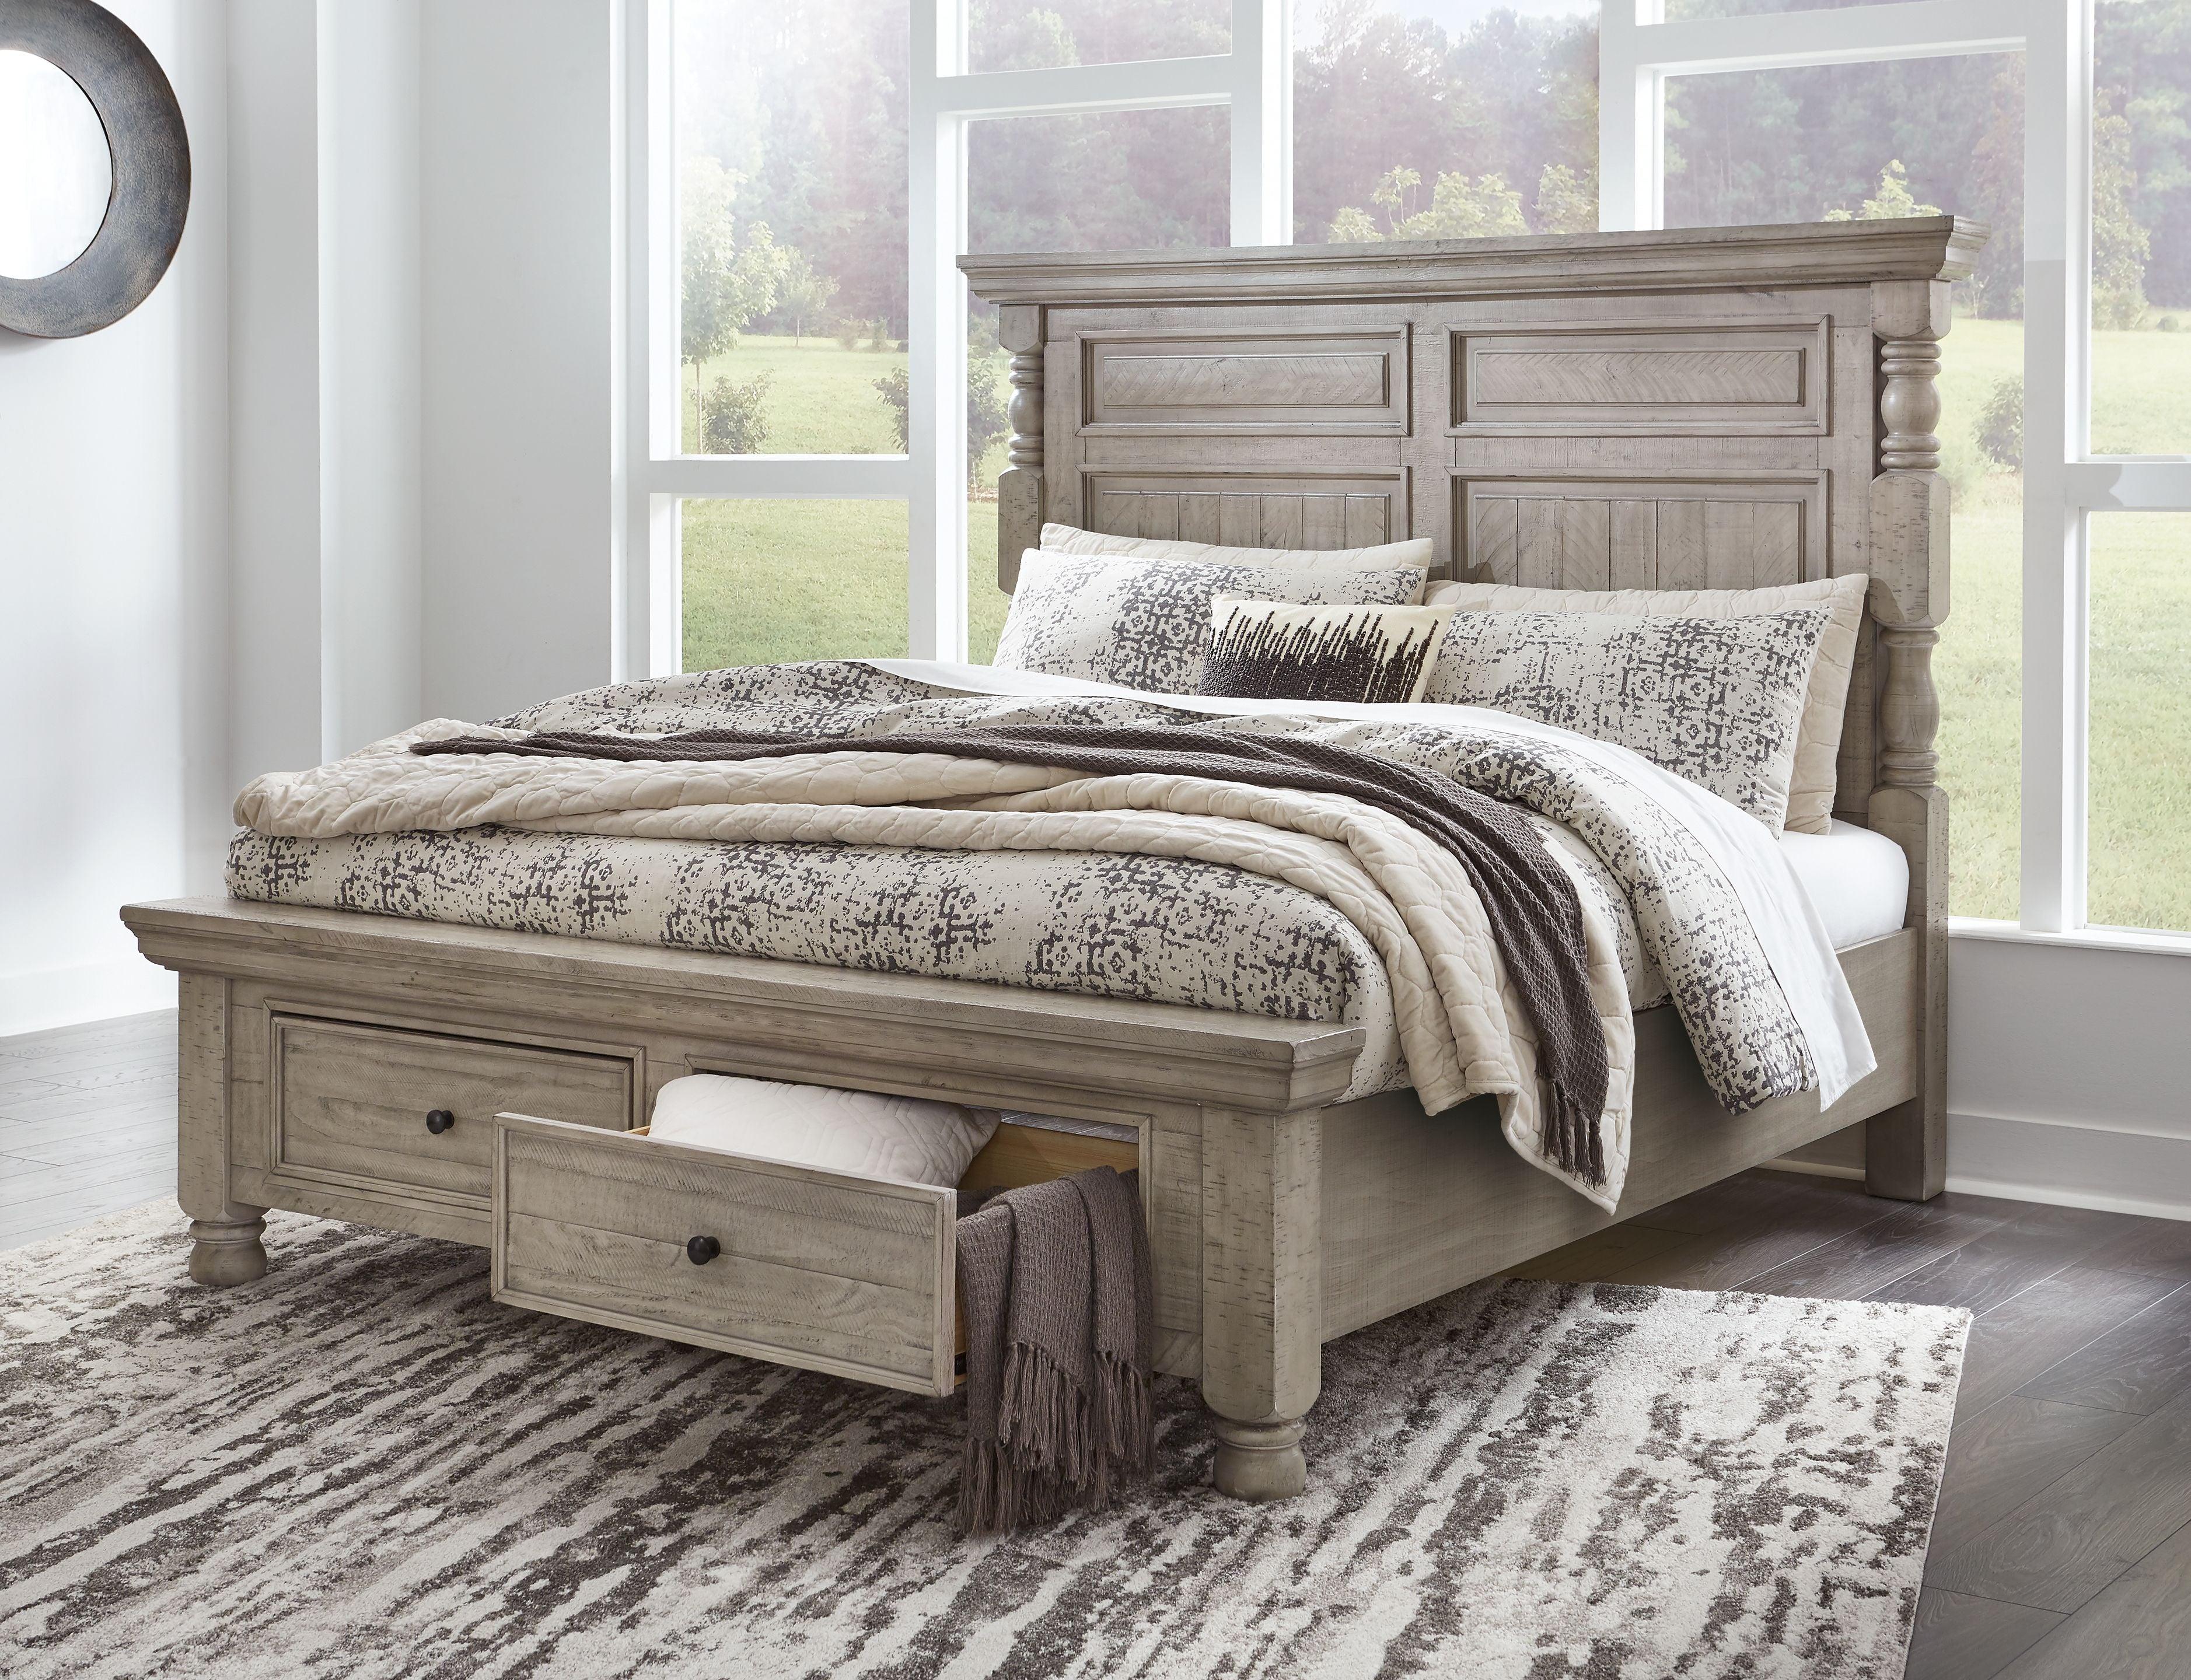 Millennium® by Ashley - Harrastone - Bedroom Set - 5th Avenue Furniture